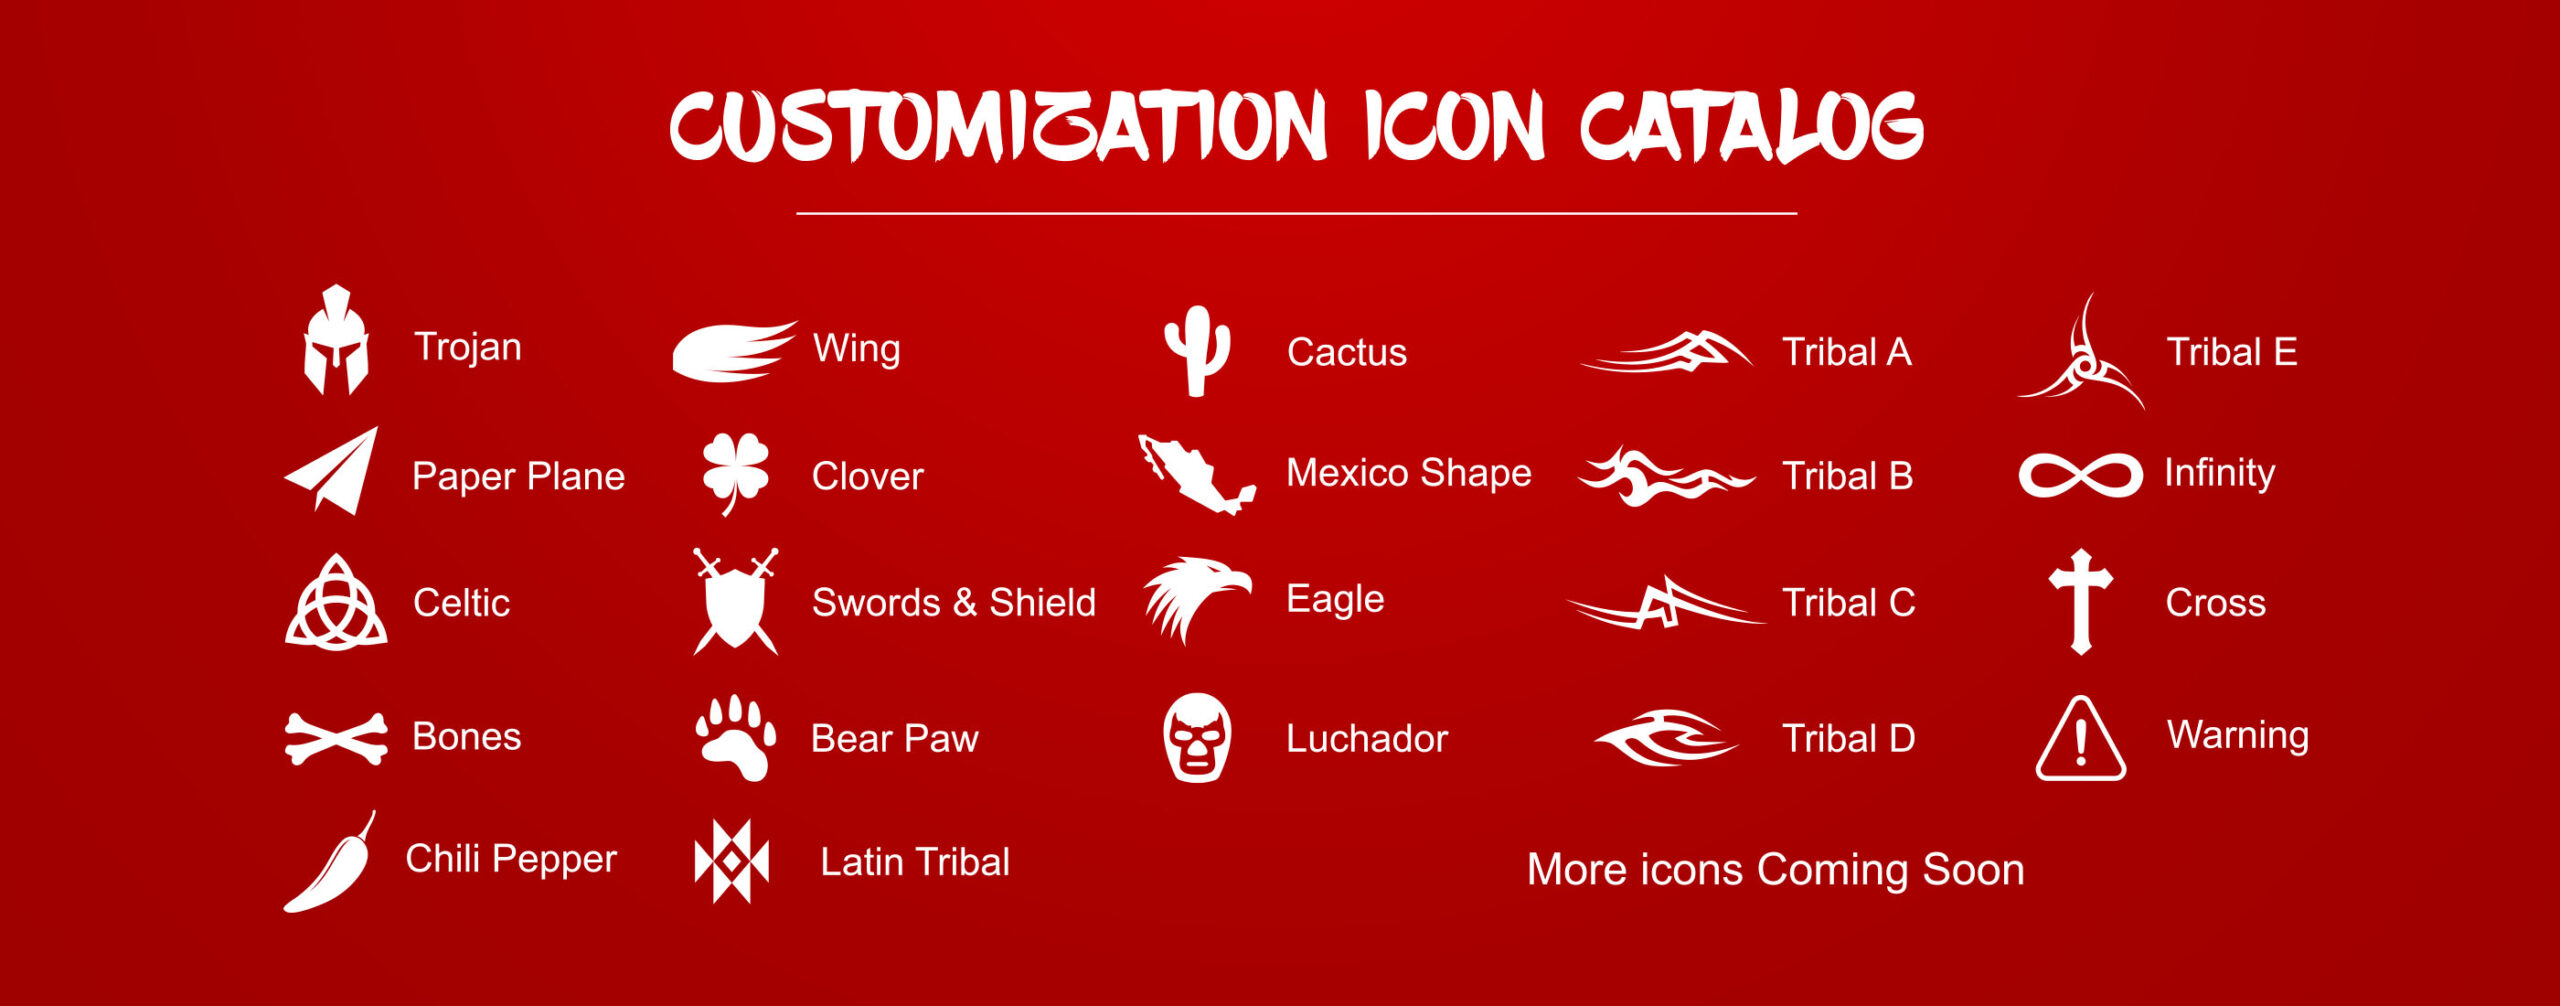 Customization icon catalog